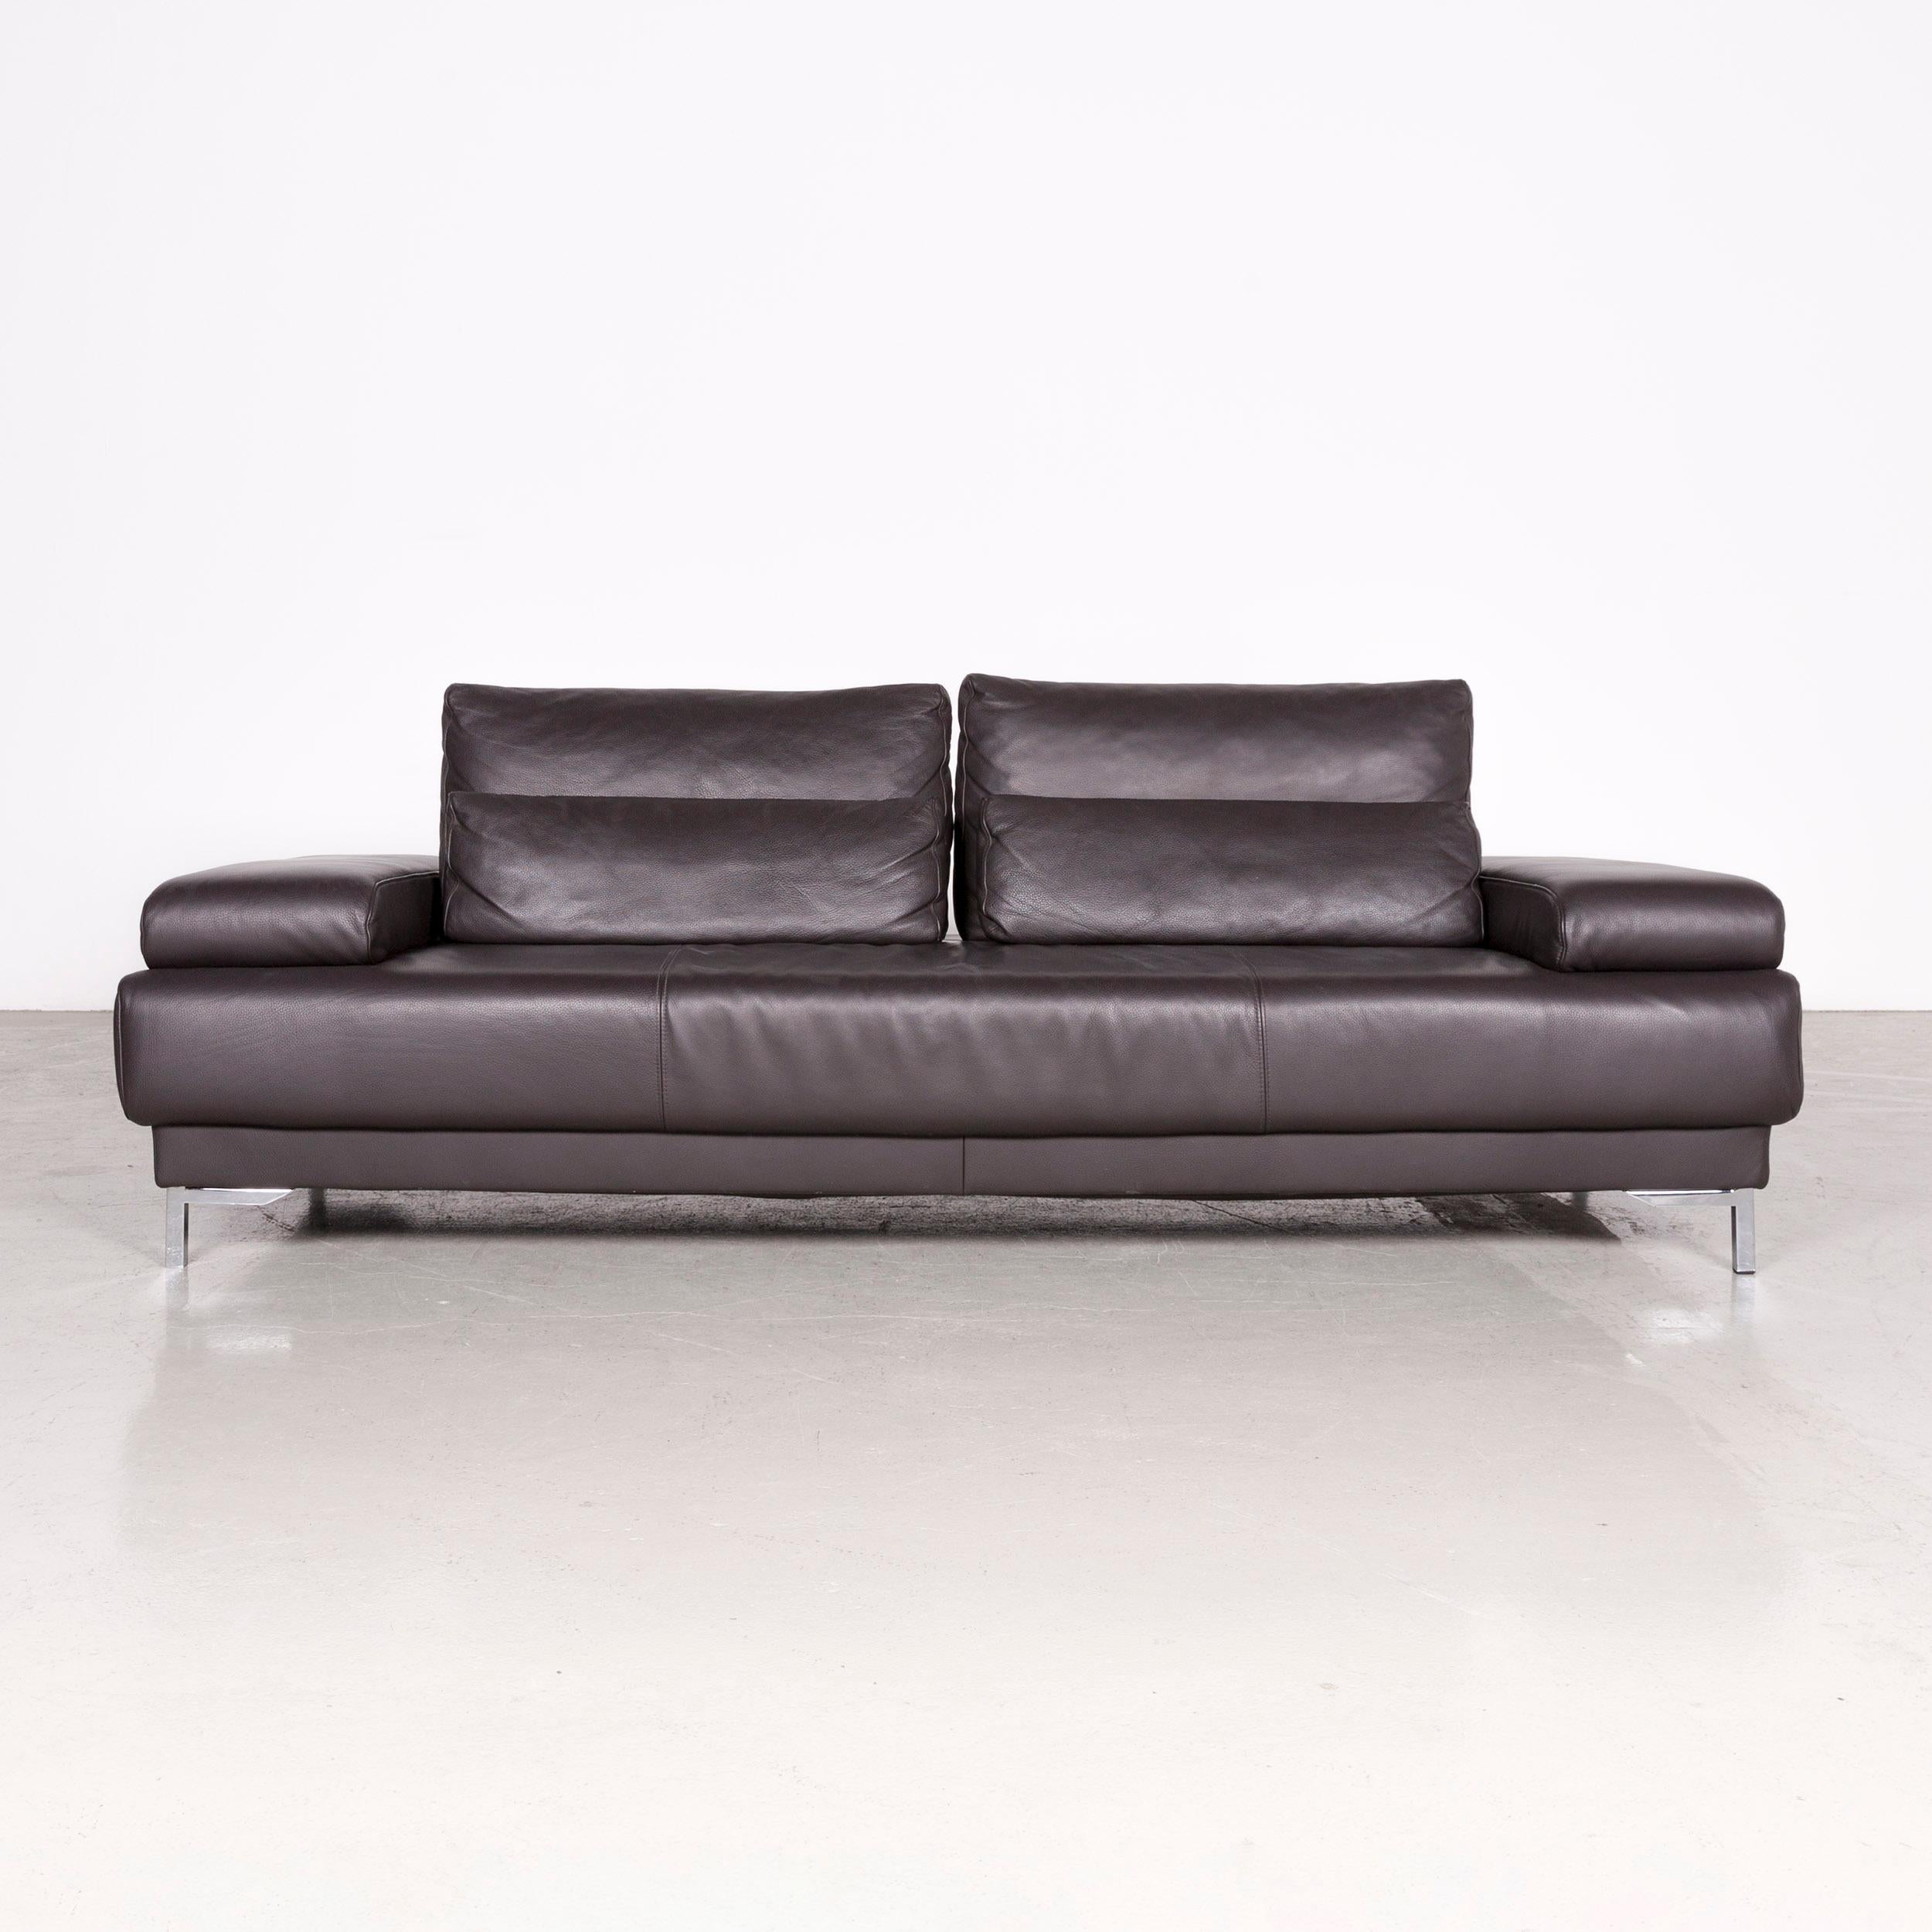 Ewald Schillig Harry designer sofa footstool set leather brown three-seat couch.